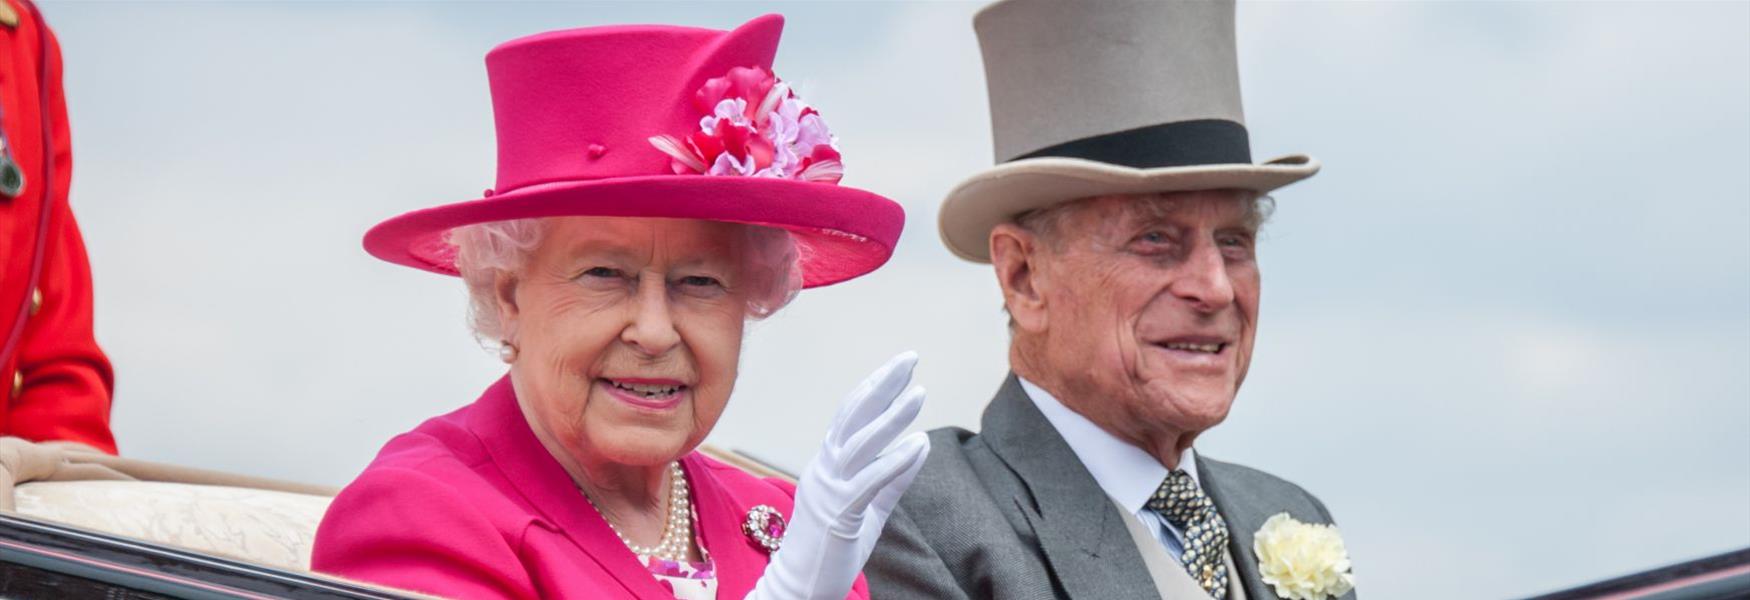 Queen Elizabeth II's funeral to impact flights at Heathrow Airport - ABC  News